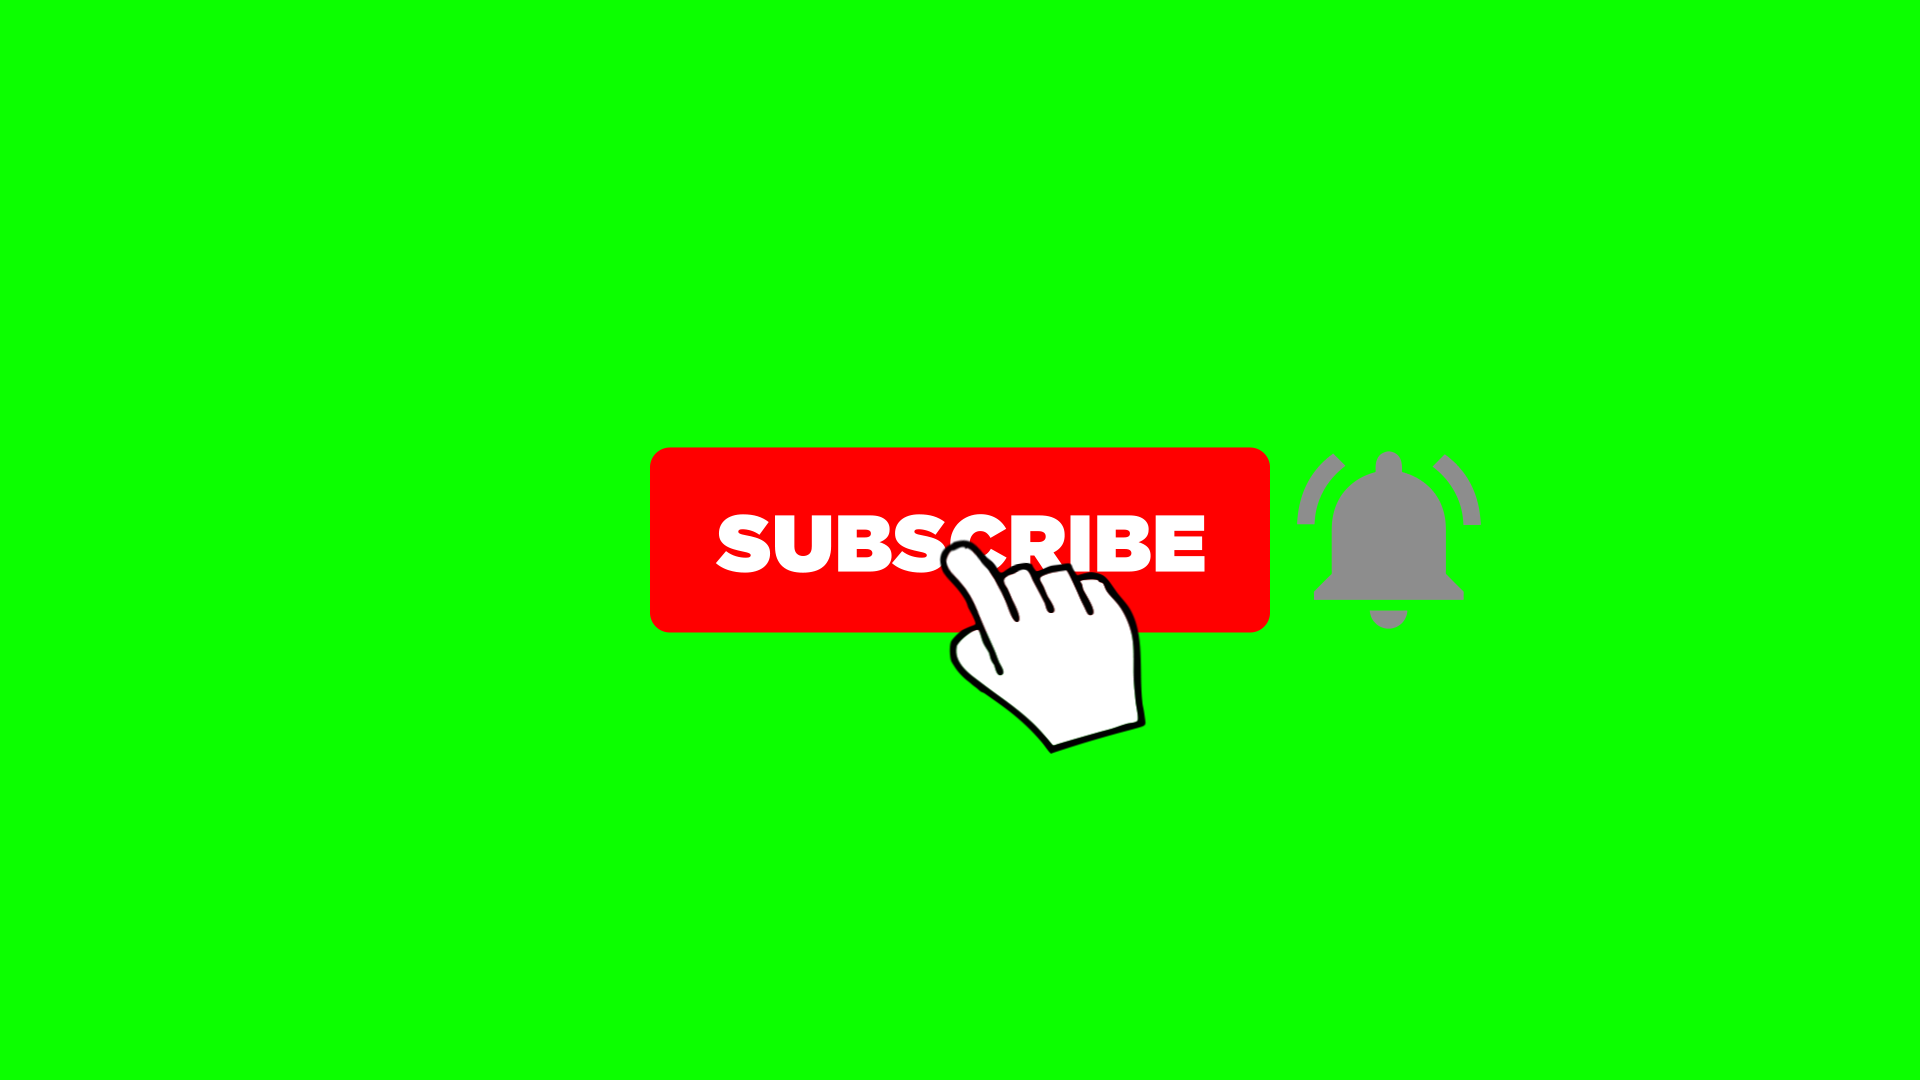 More подписаться. Subscribe зеленый. Кнопка подписаться на зеленом фоне. Анимация Subscribe and like. Кнопка Subscribe баннер.